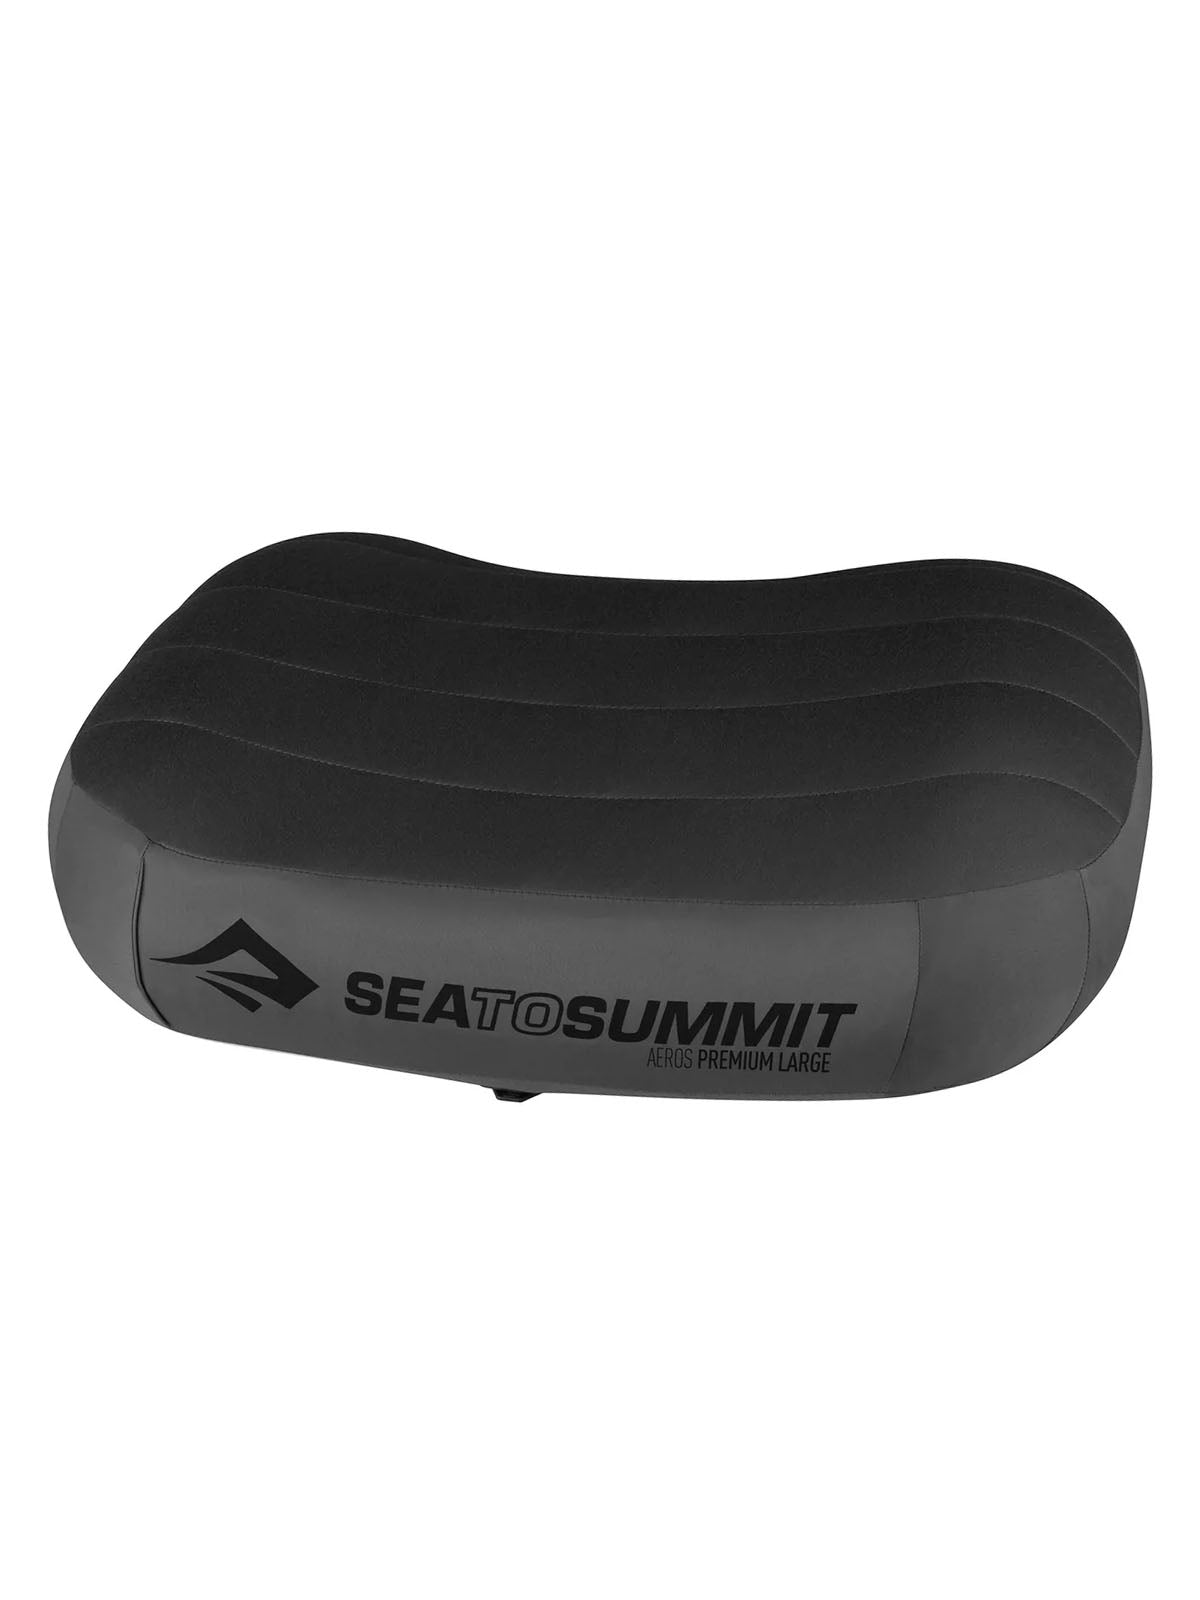 Sea To Summit Aeros Premium Pillow large